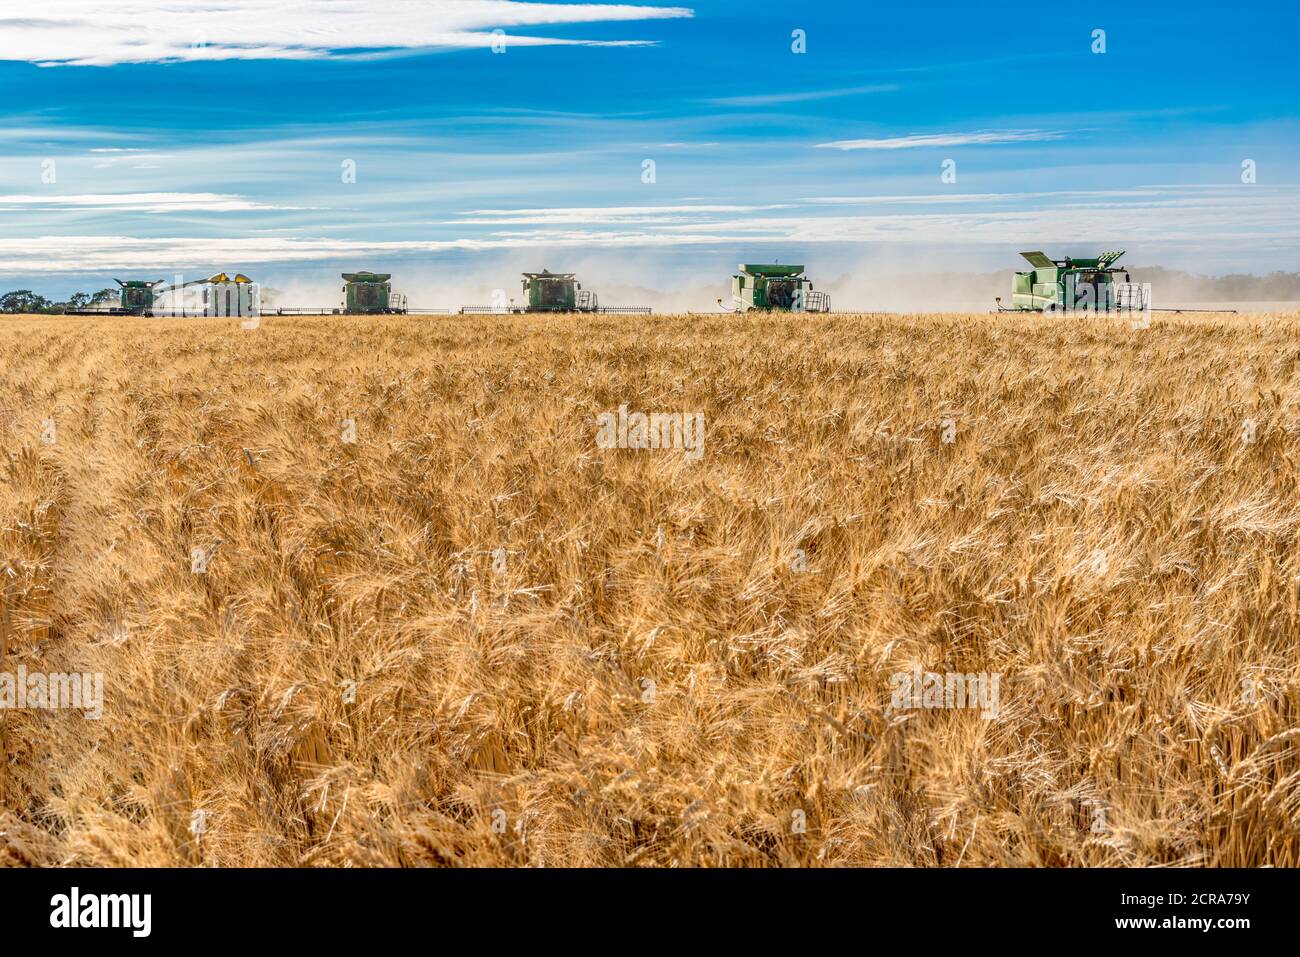 Wymark, SK- Sept 8, 2020:  Multiple combines harvesting wheat in a field at sunset in Wymark, Saskatchewan Stock Photo